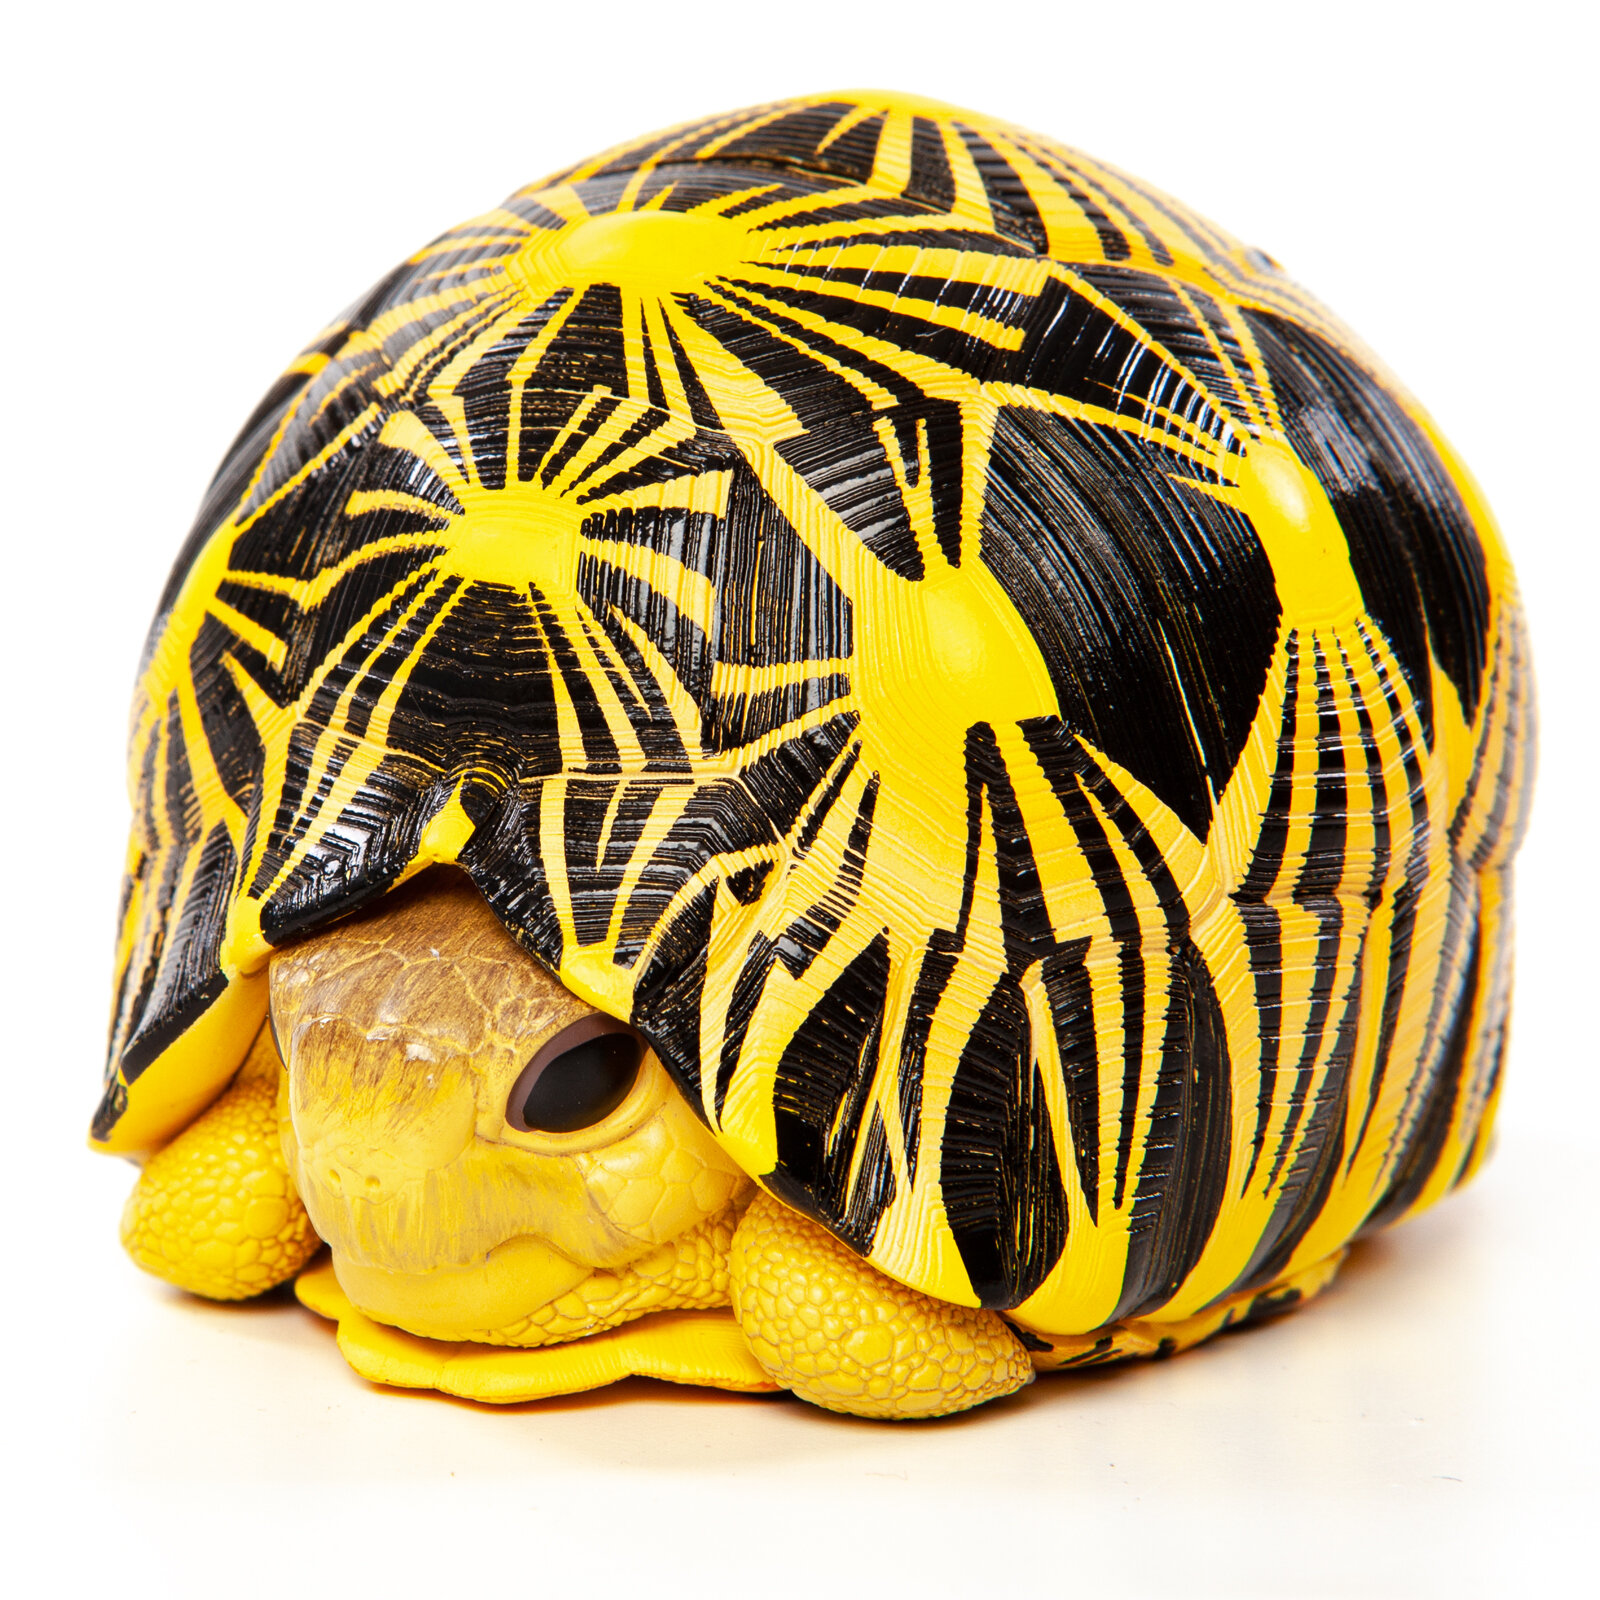 EXOPRIMA Фигурка лучевой черепахи, чёрно-жёлтая EXOPRIMA фигурки - фото №2